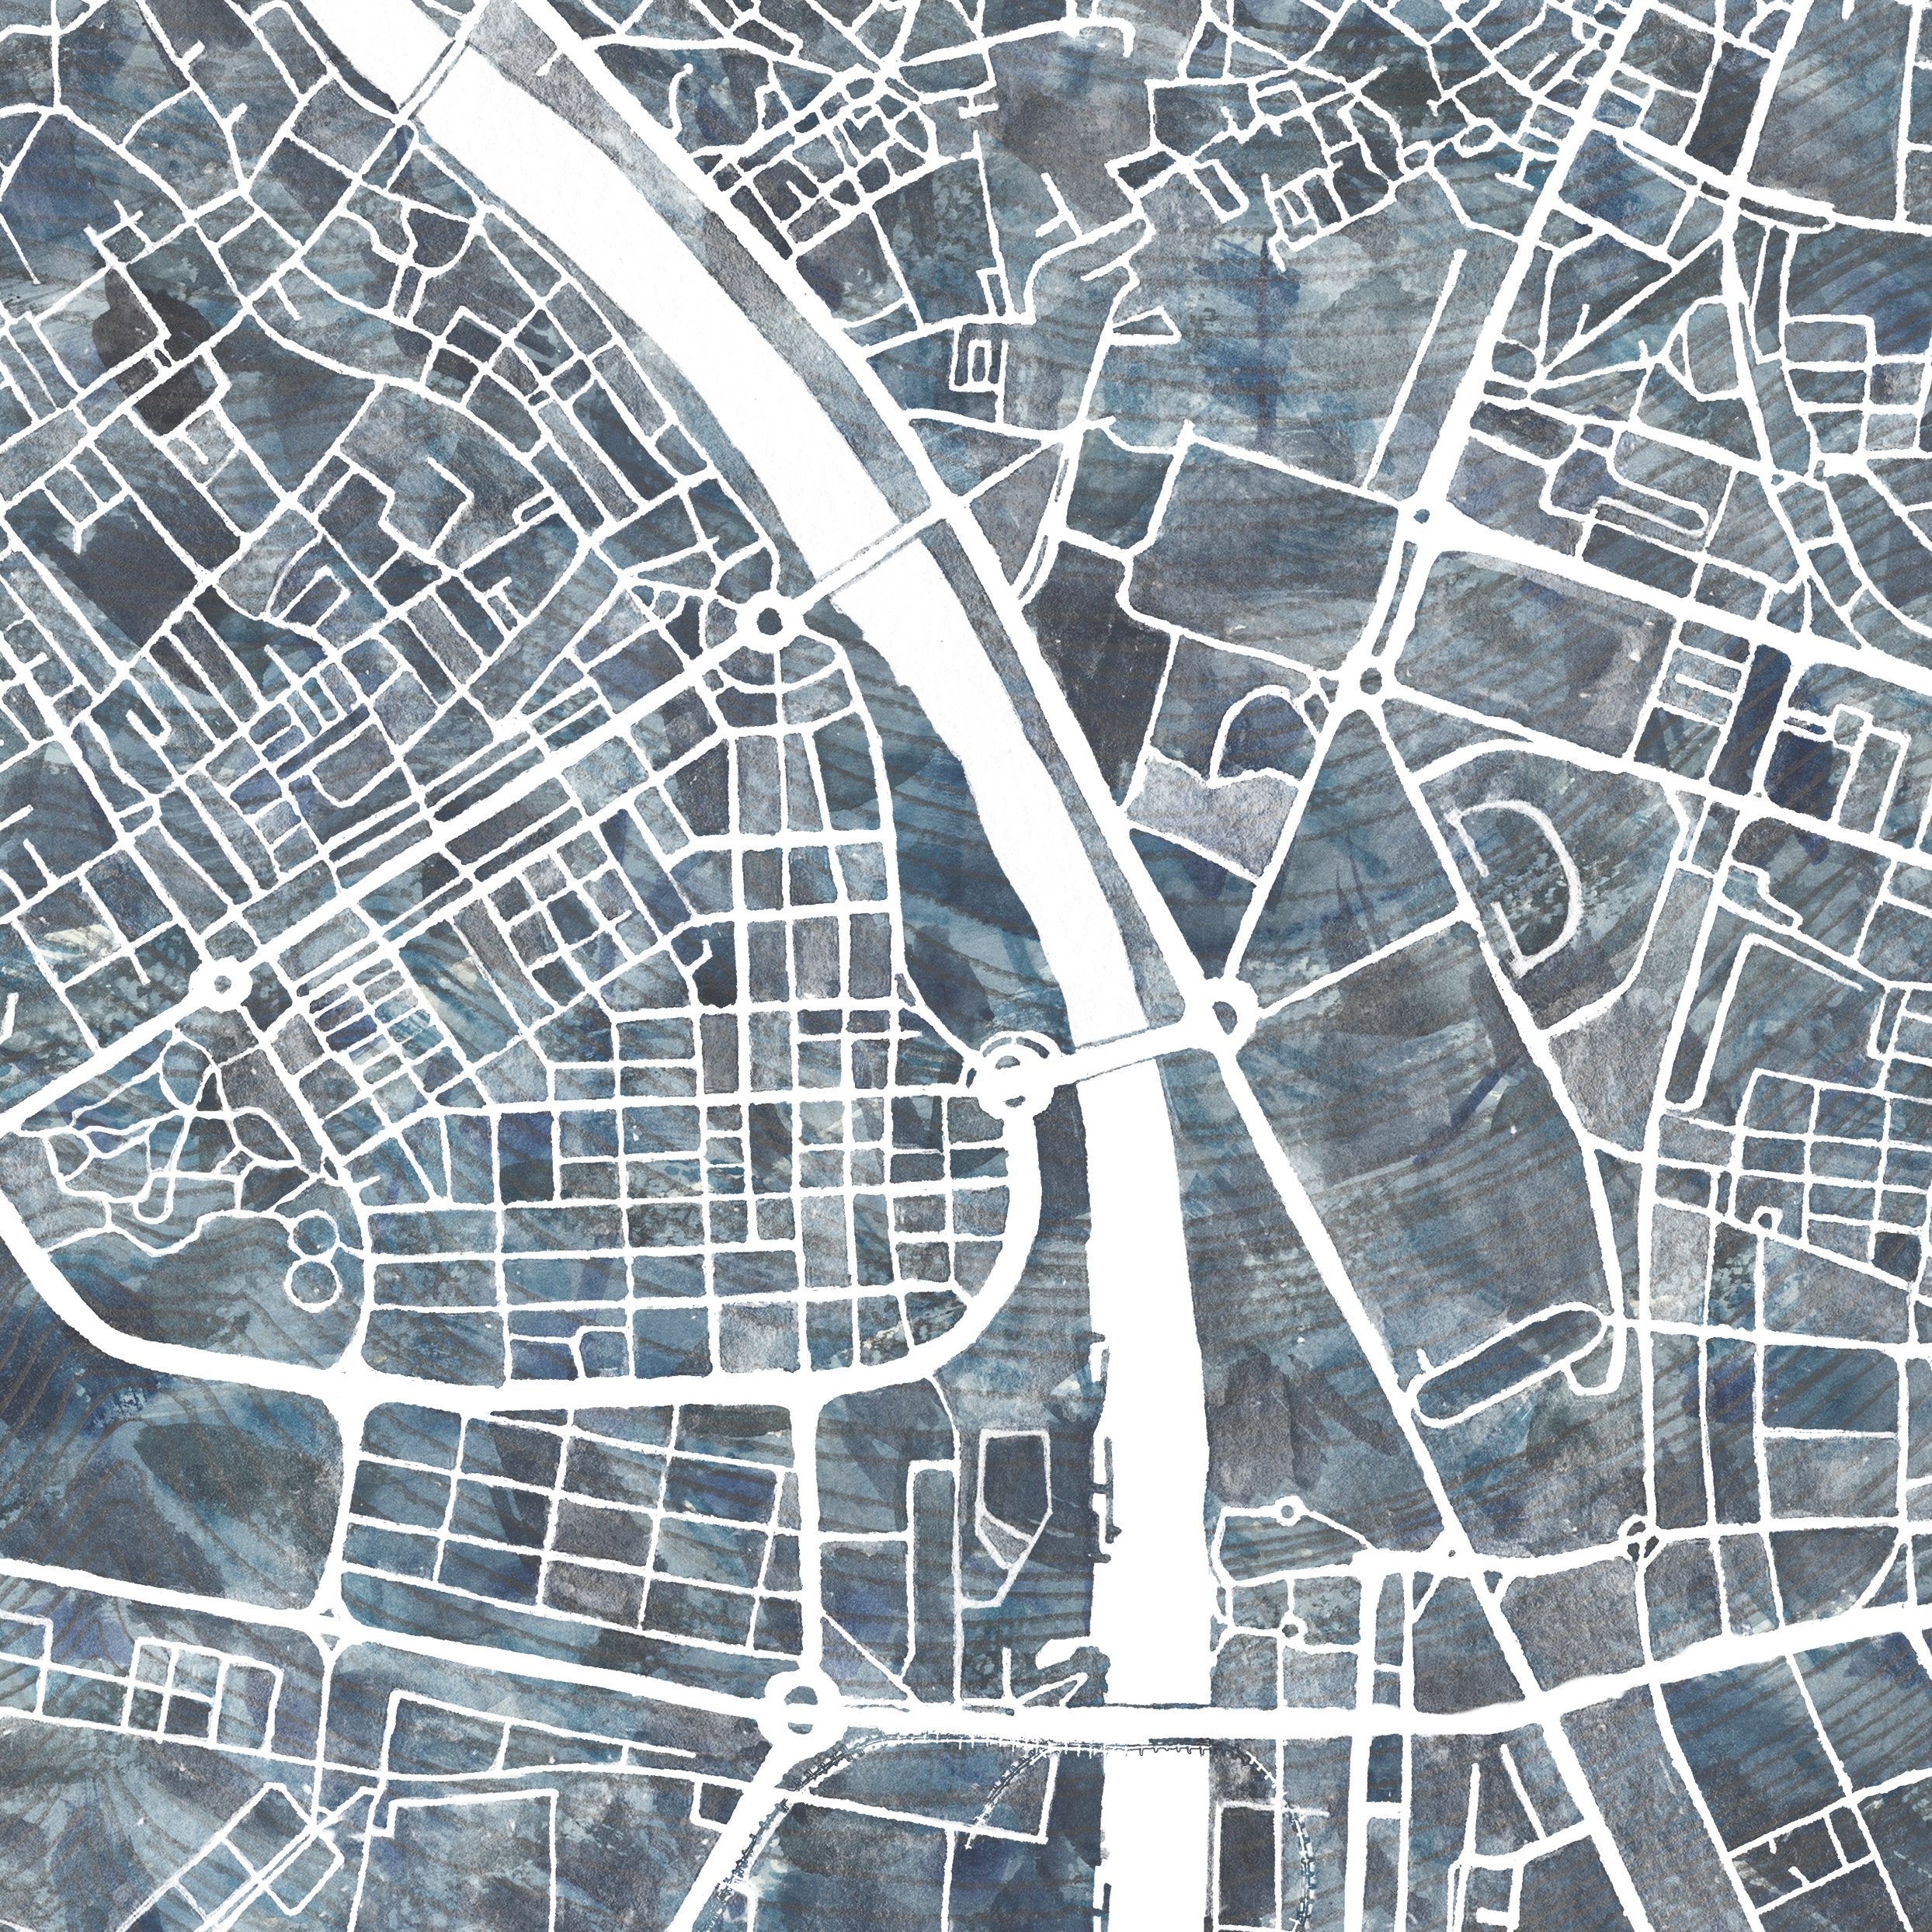 SEVILLE Urban Fabrics City Map: PRINT